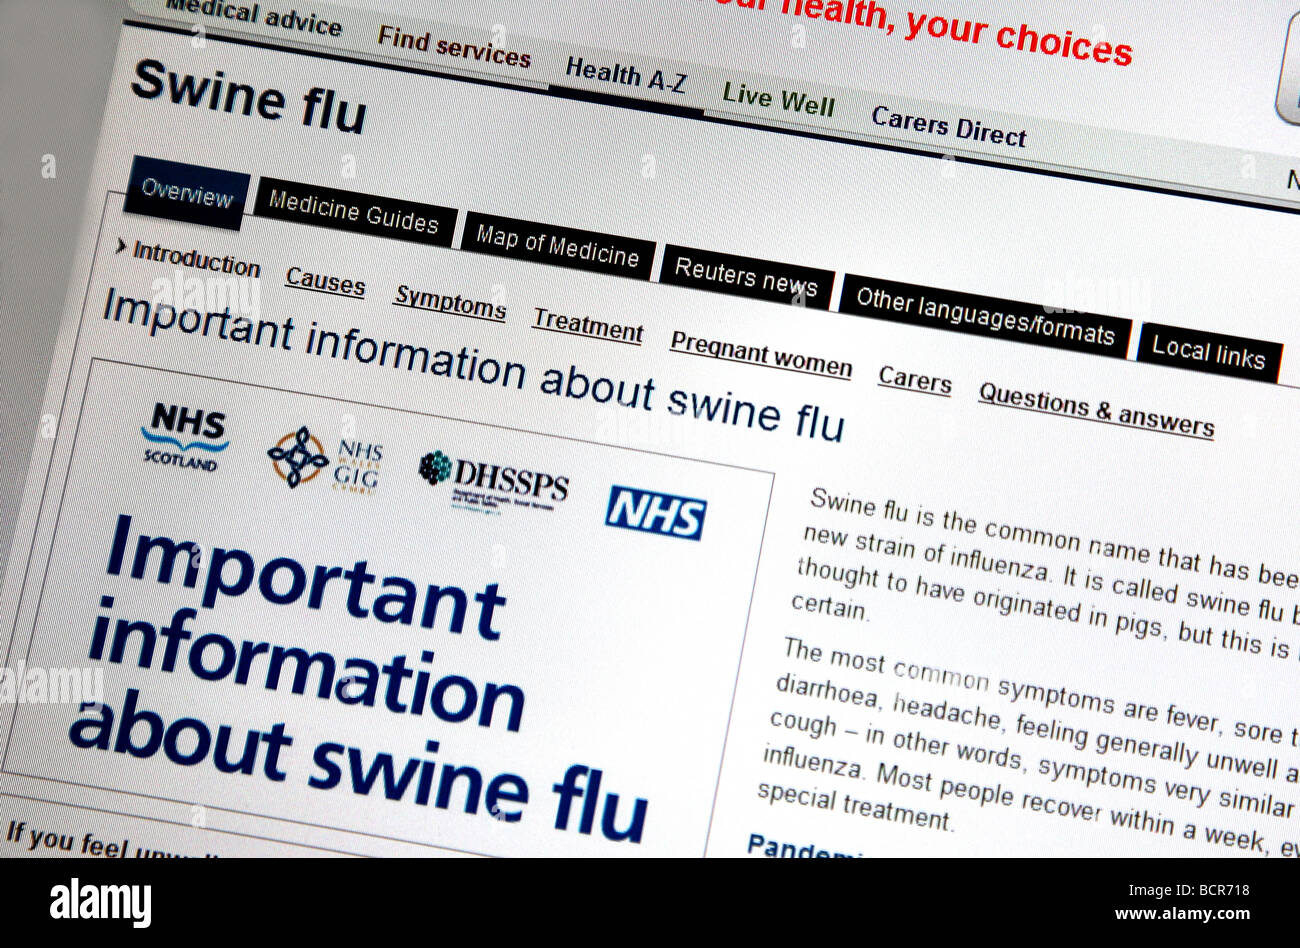 Swine flu advice on NHS website Stock Photo